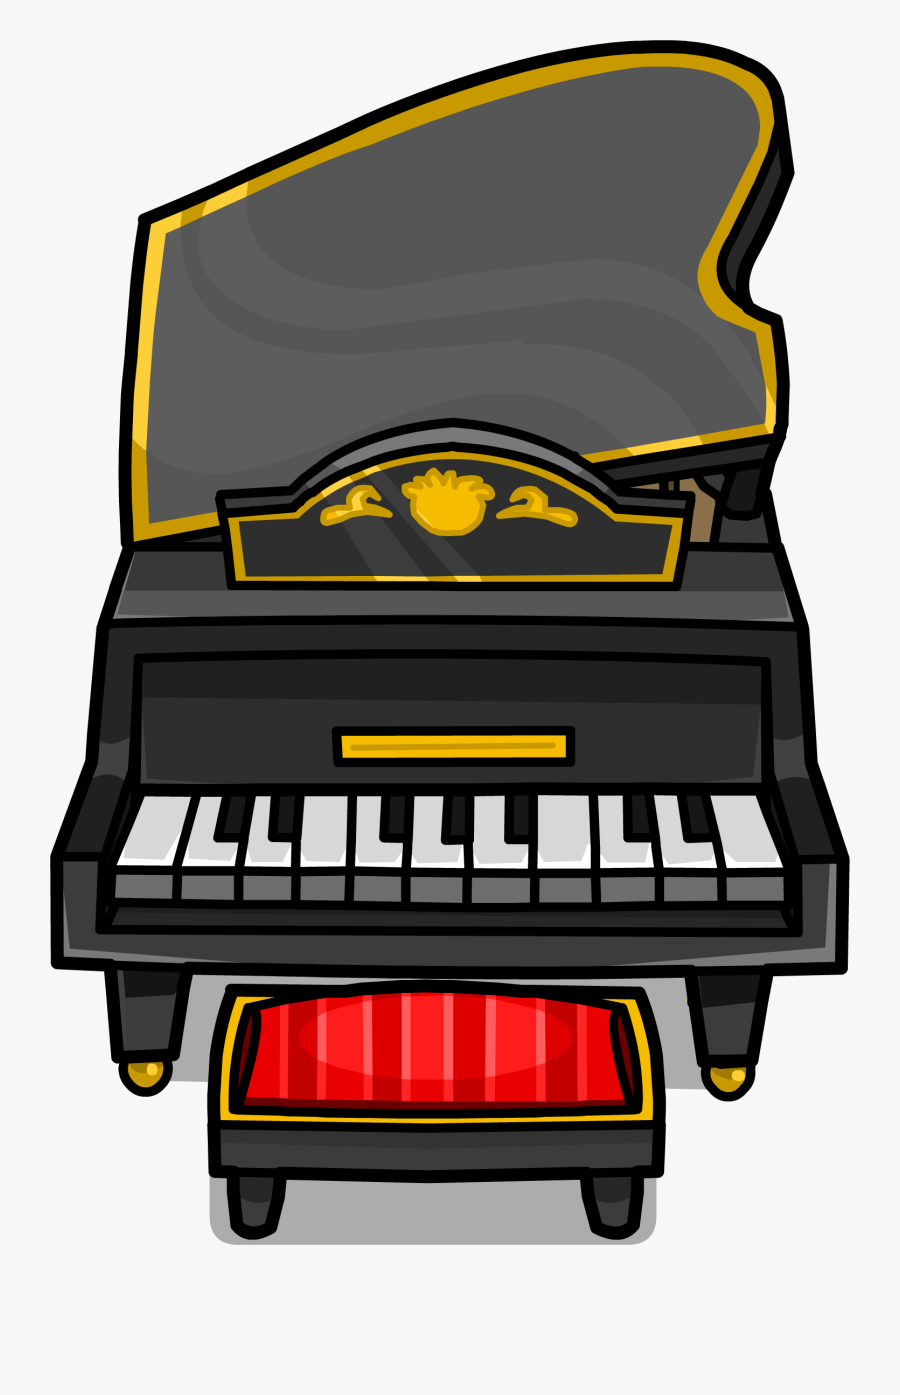 Grand Piano Sprite - Player Piano, Transparent Clipart